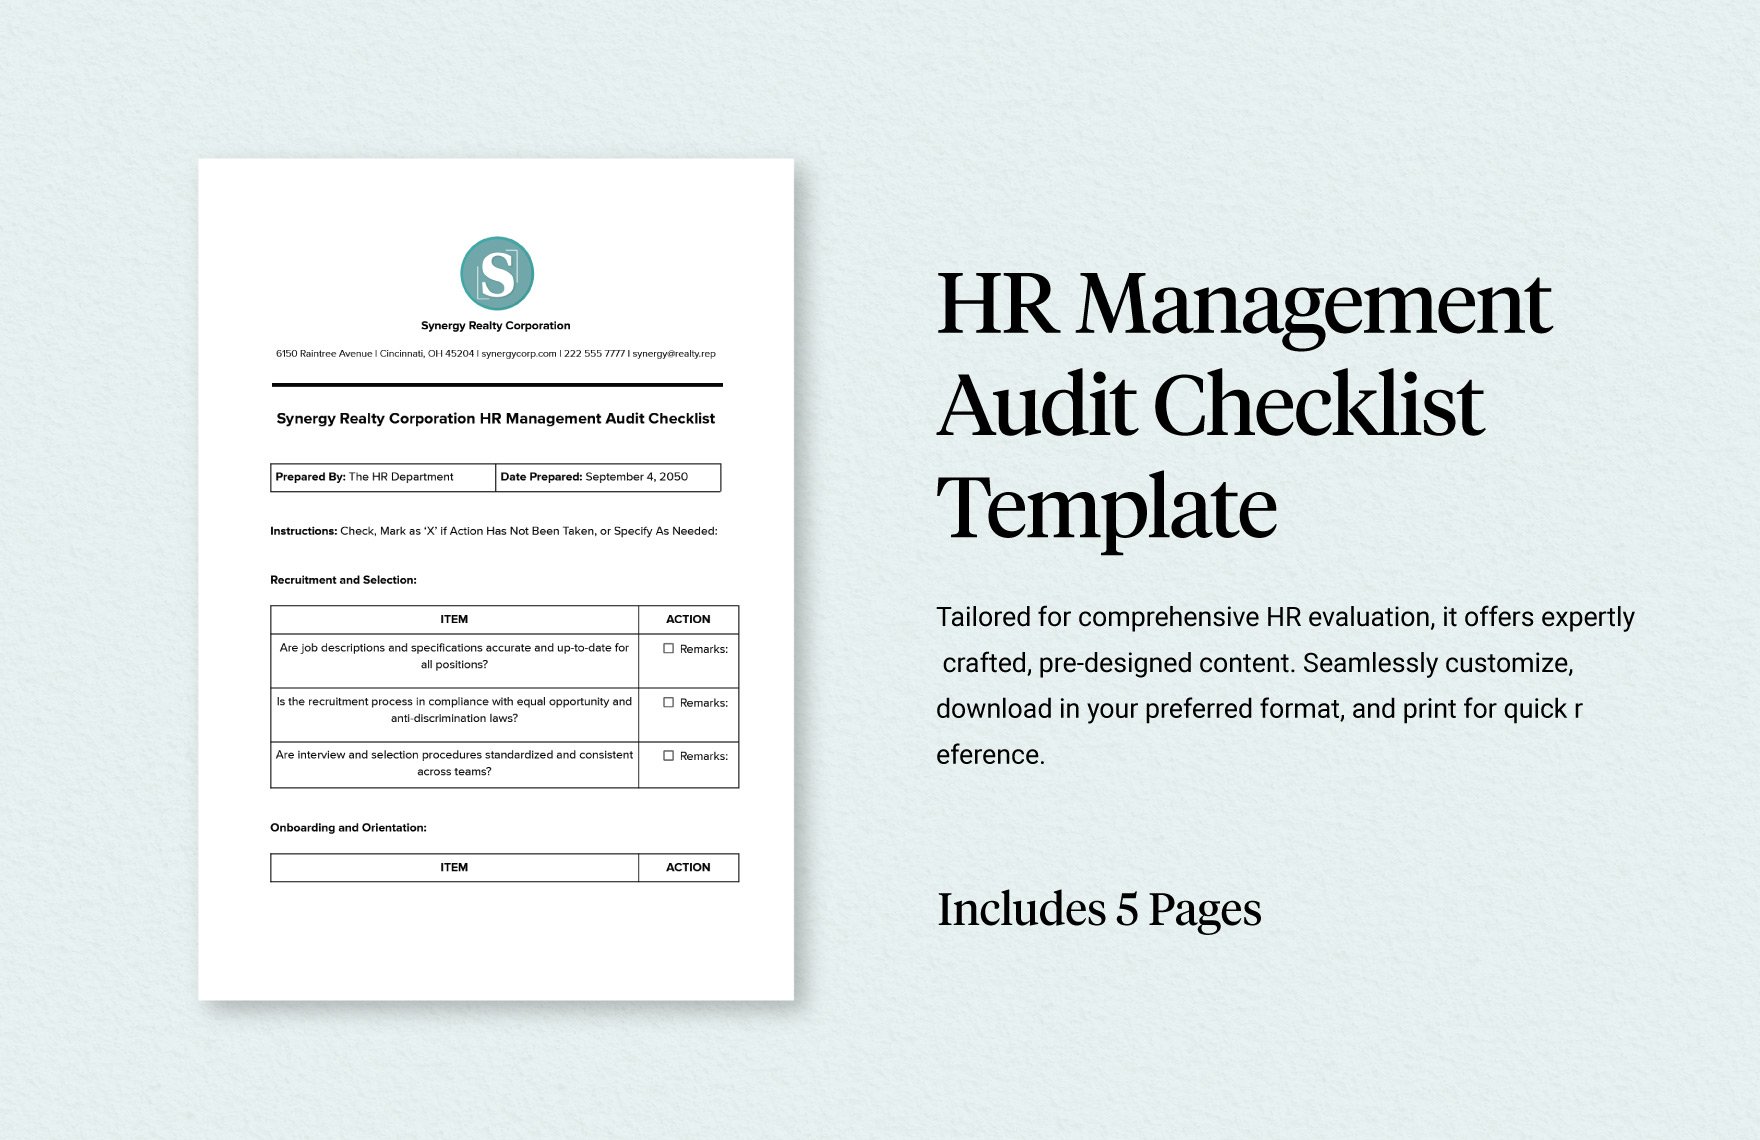 HR Management Audit Checklist Template